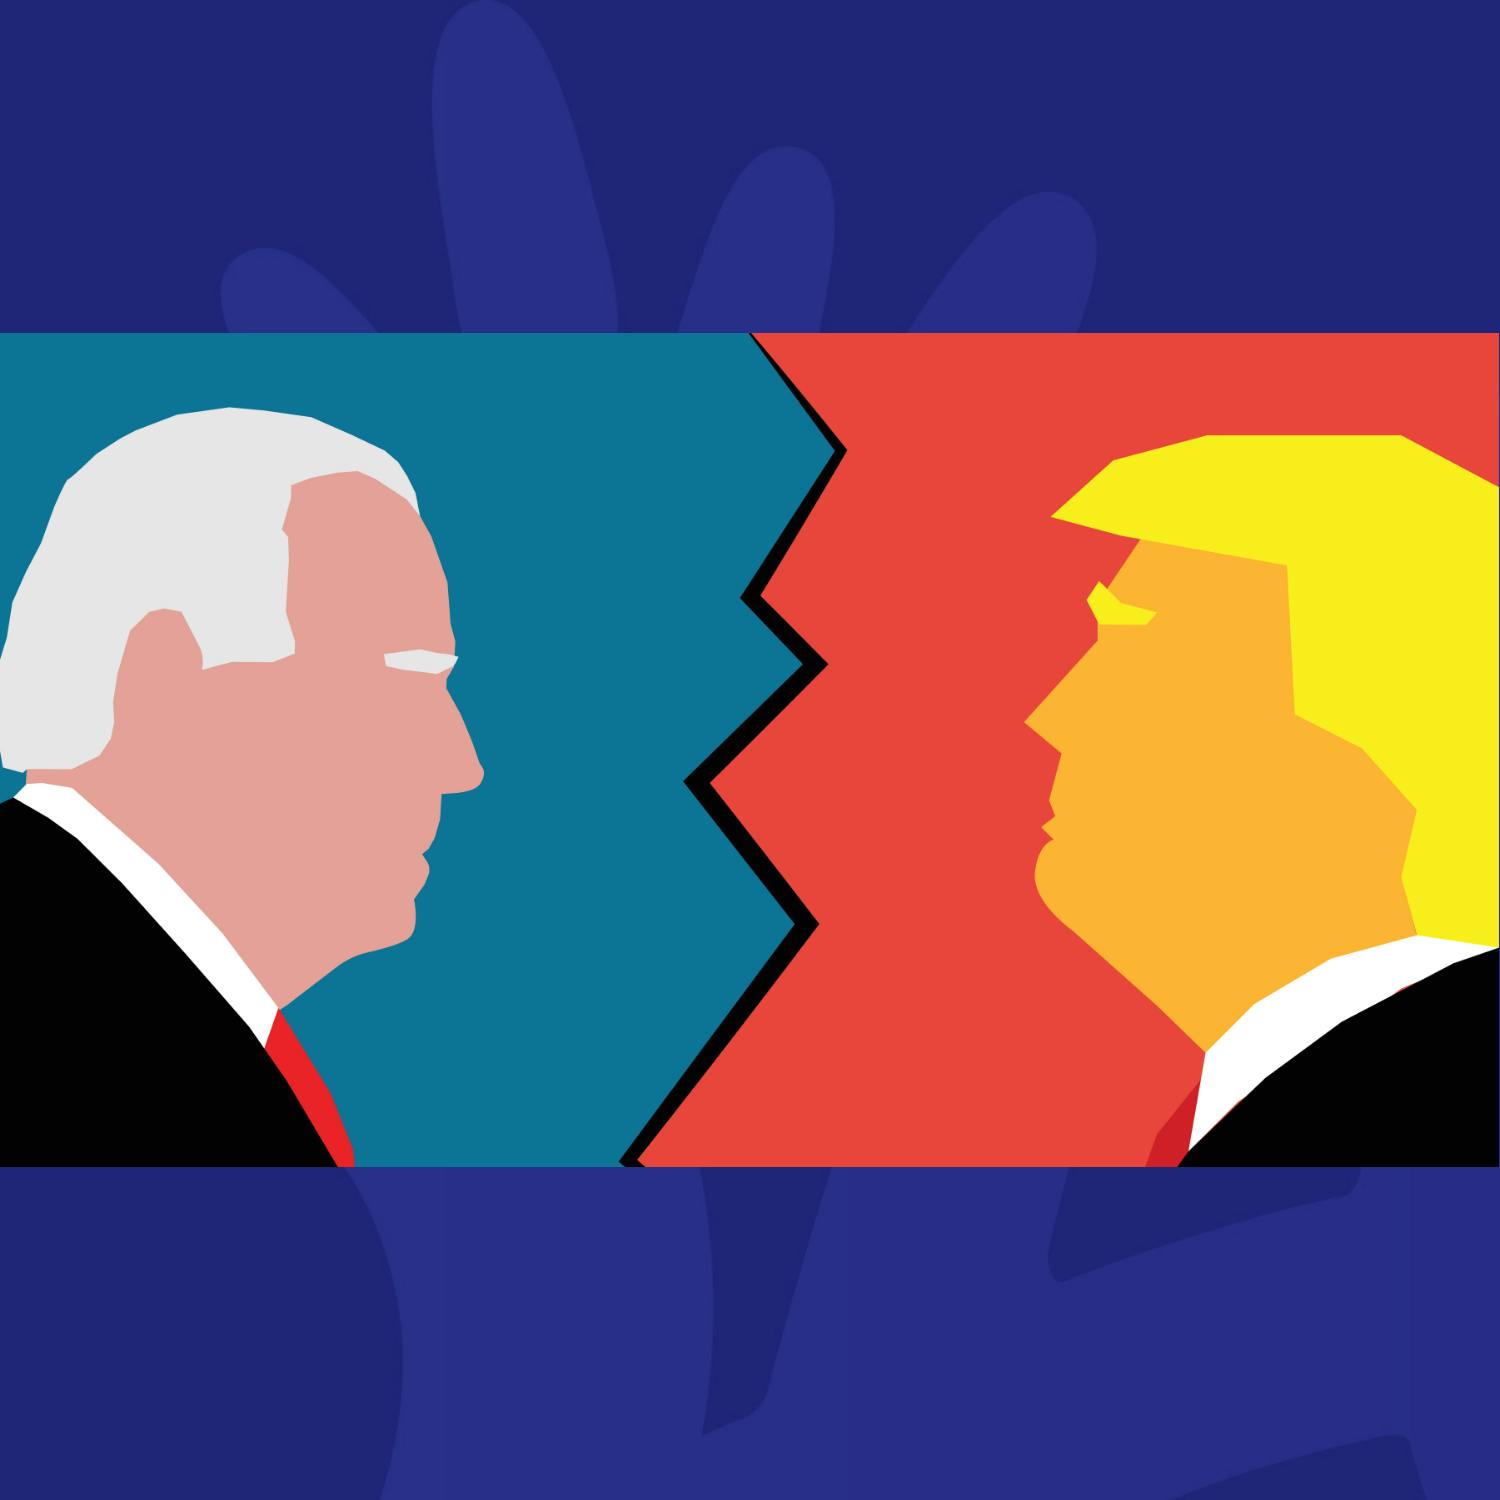 Biden And Trump Prepare For Thursday's Big Debate